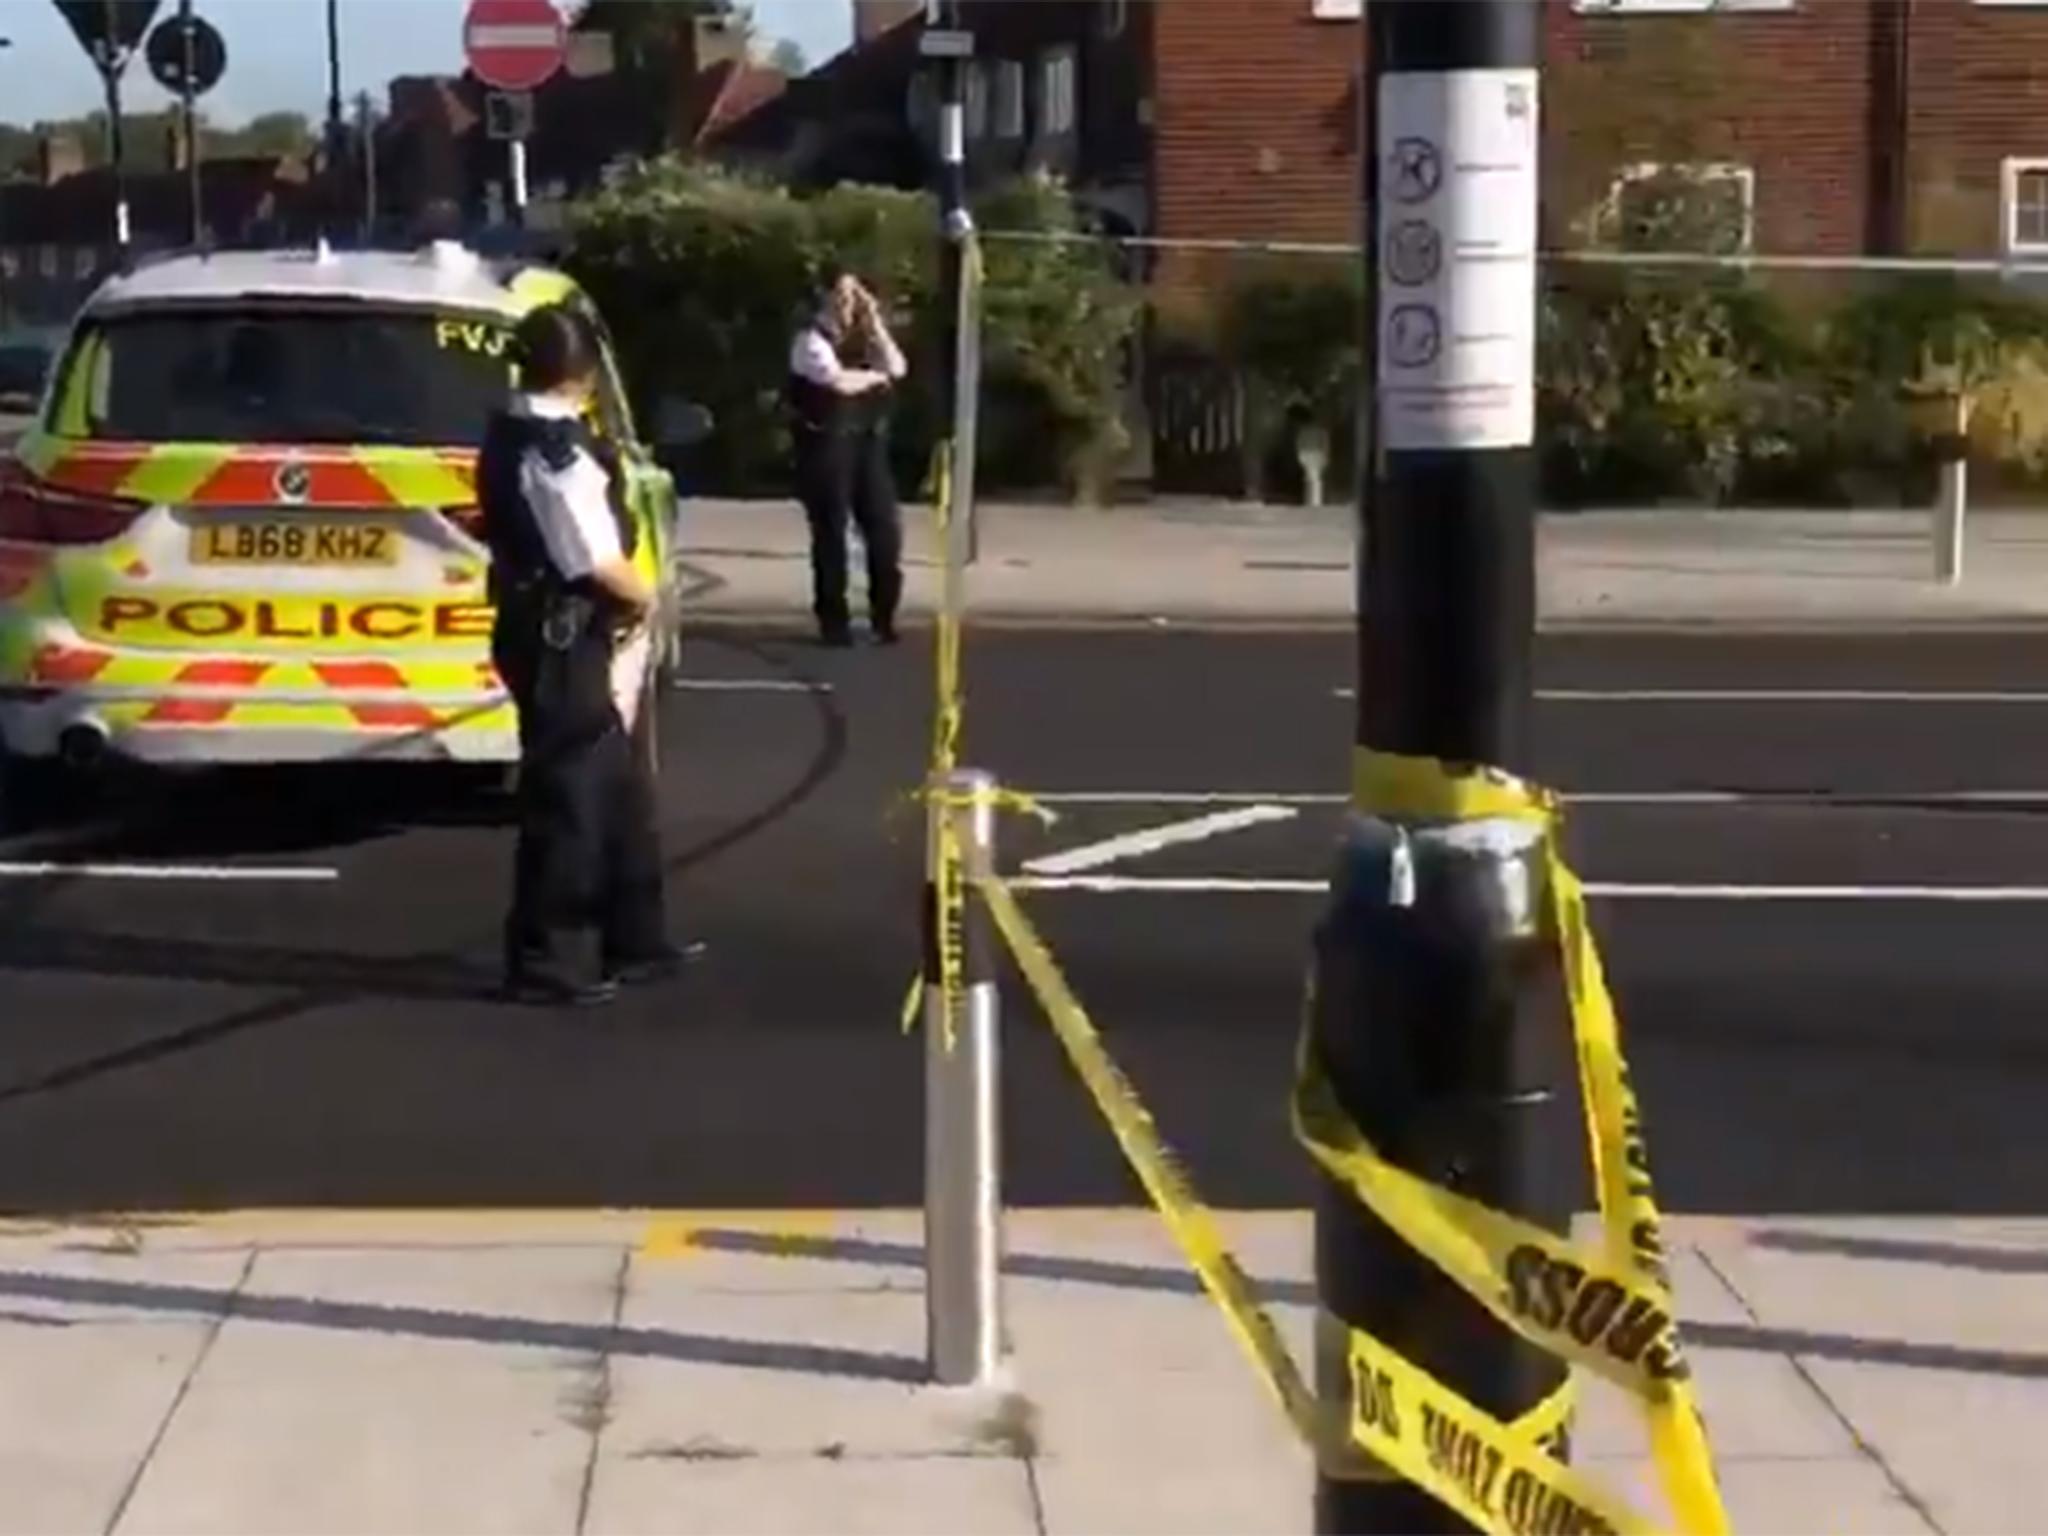 Police at the scene in Lewisham